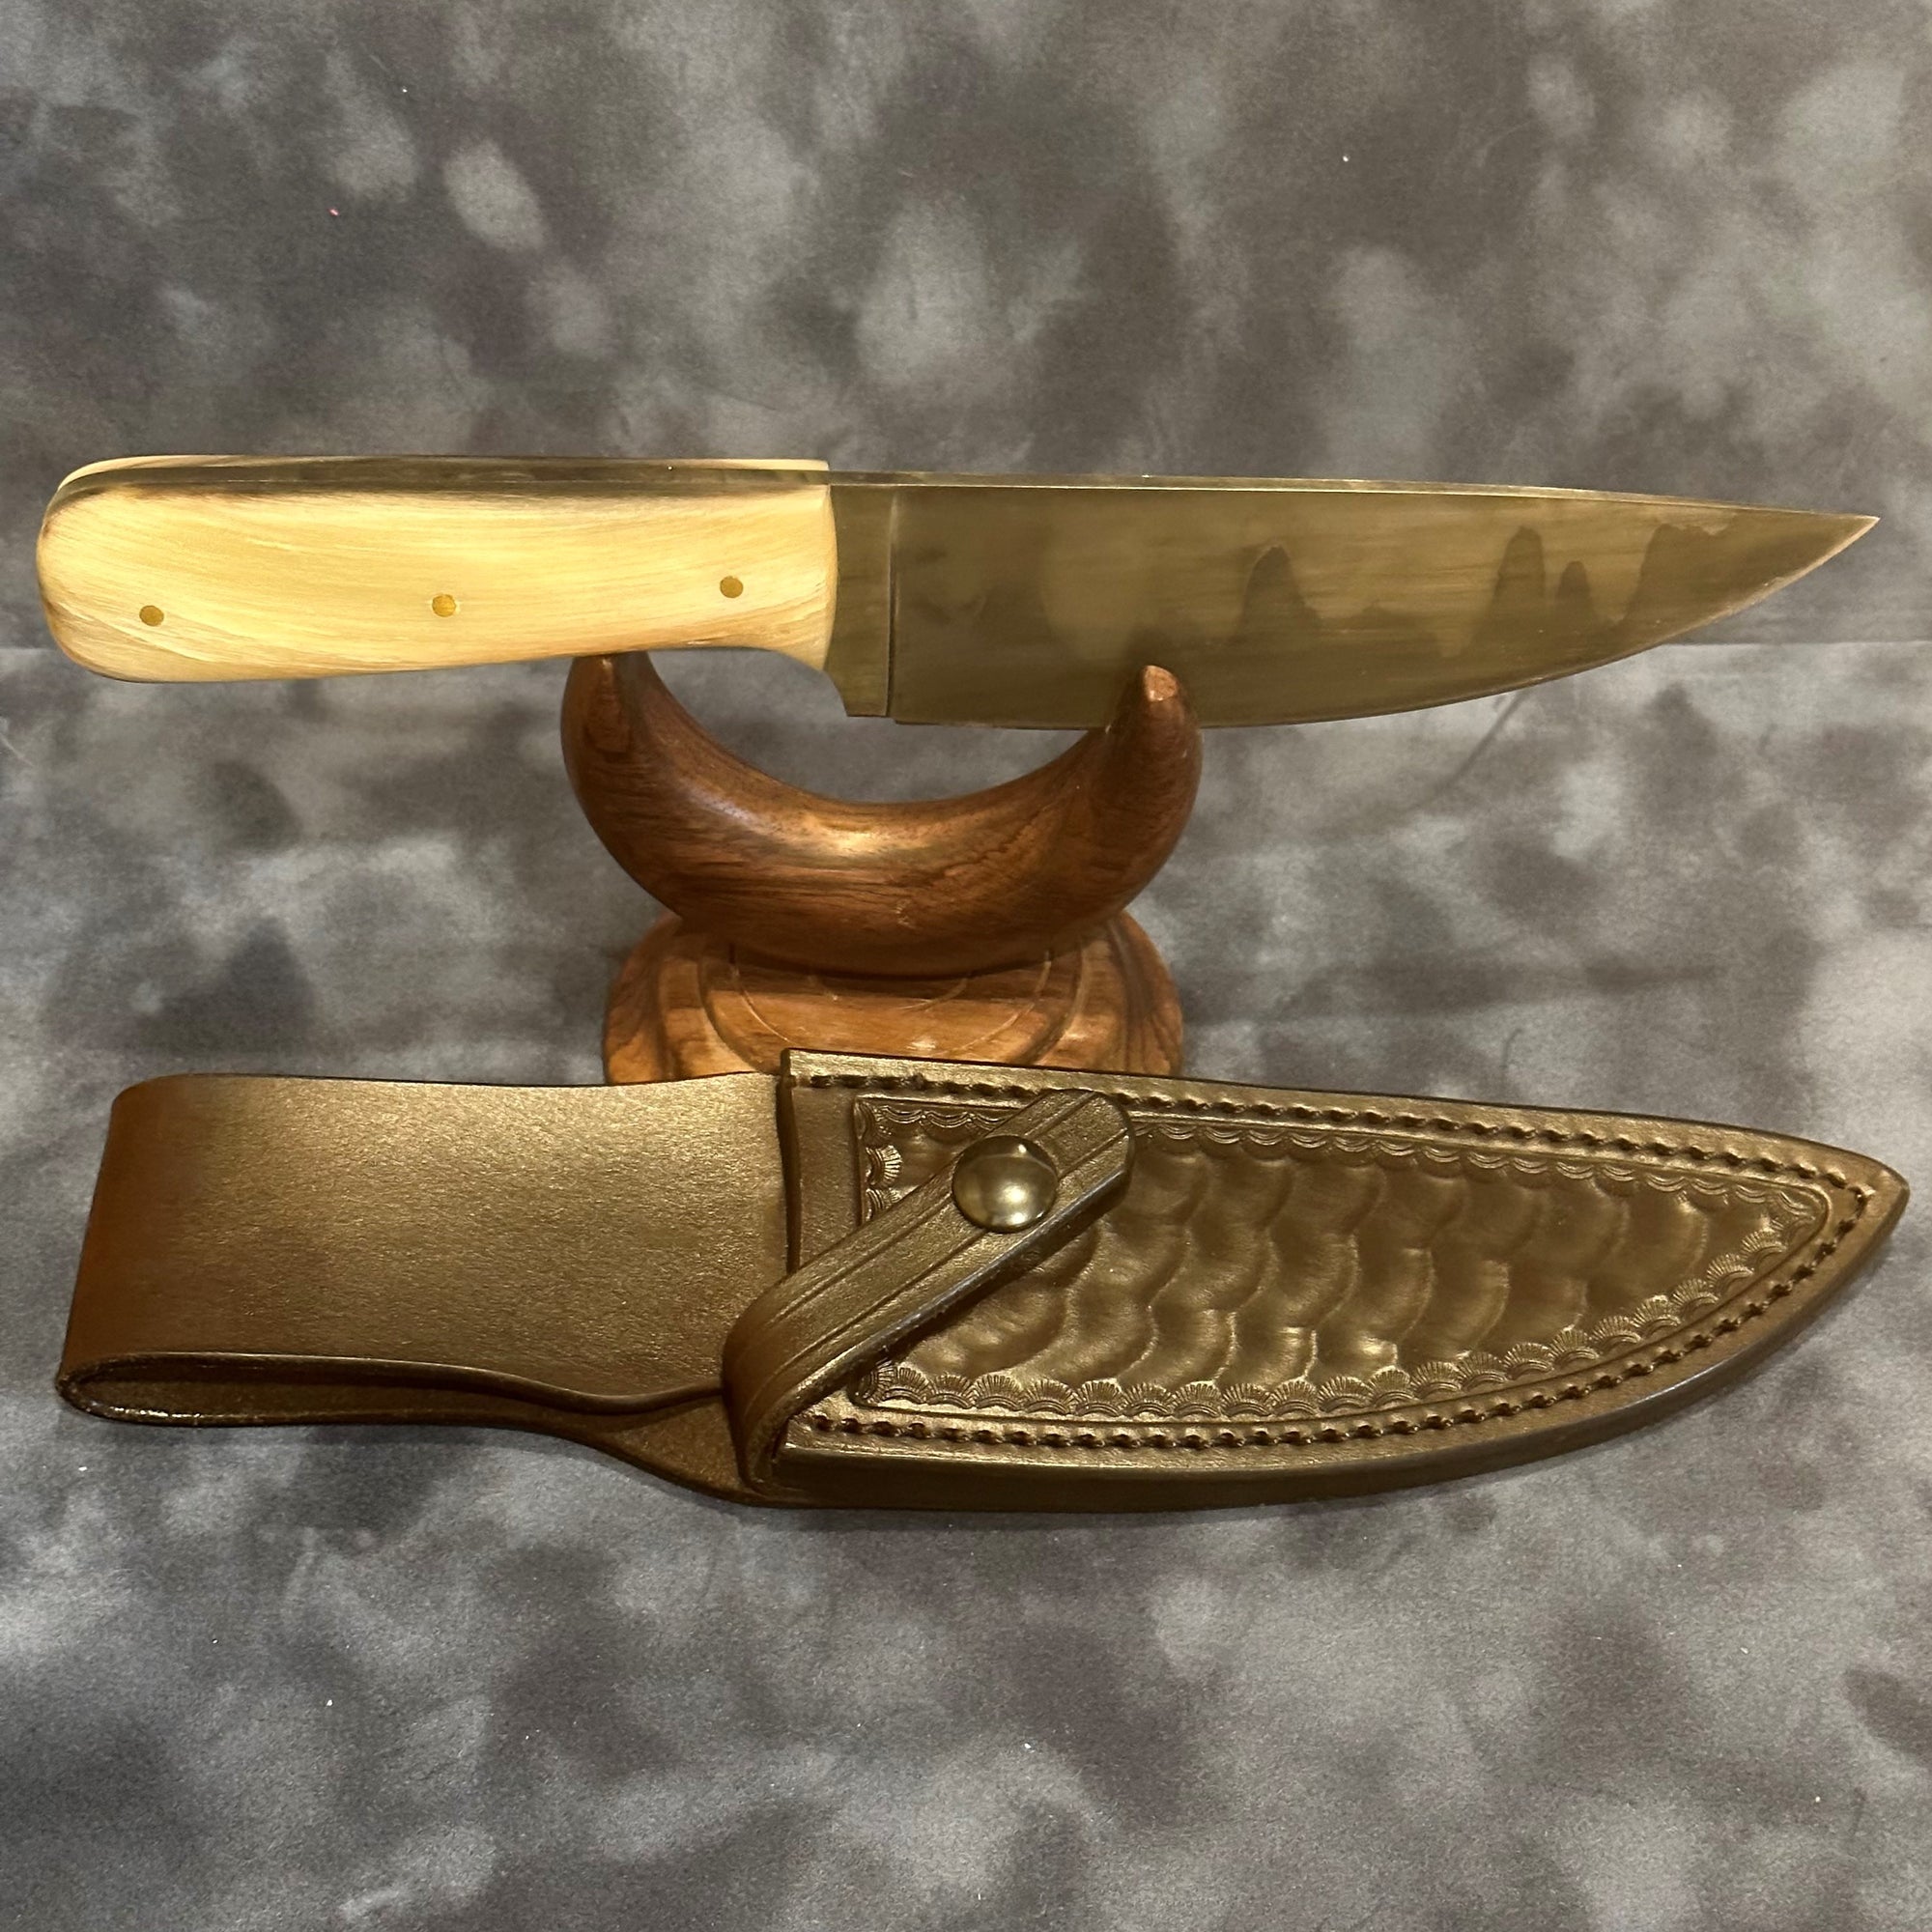 San Mai Knife designed by Chuck Cook